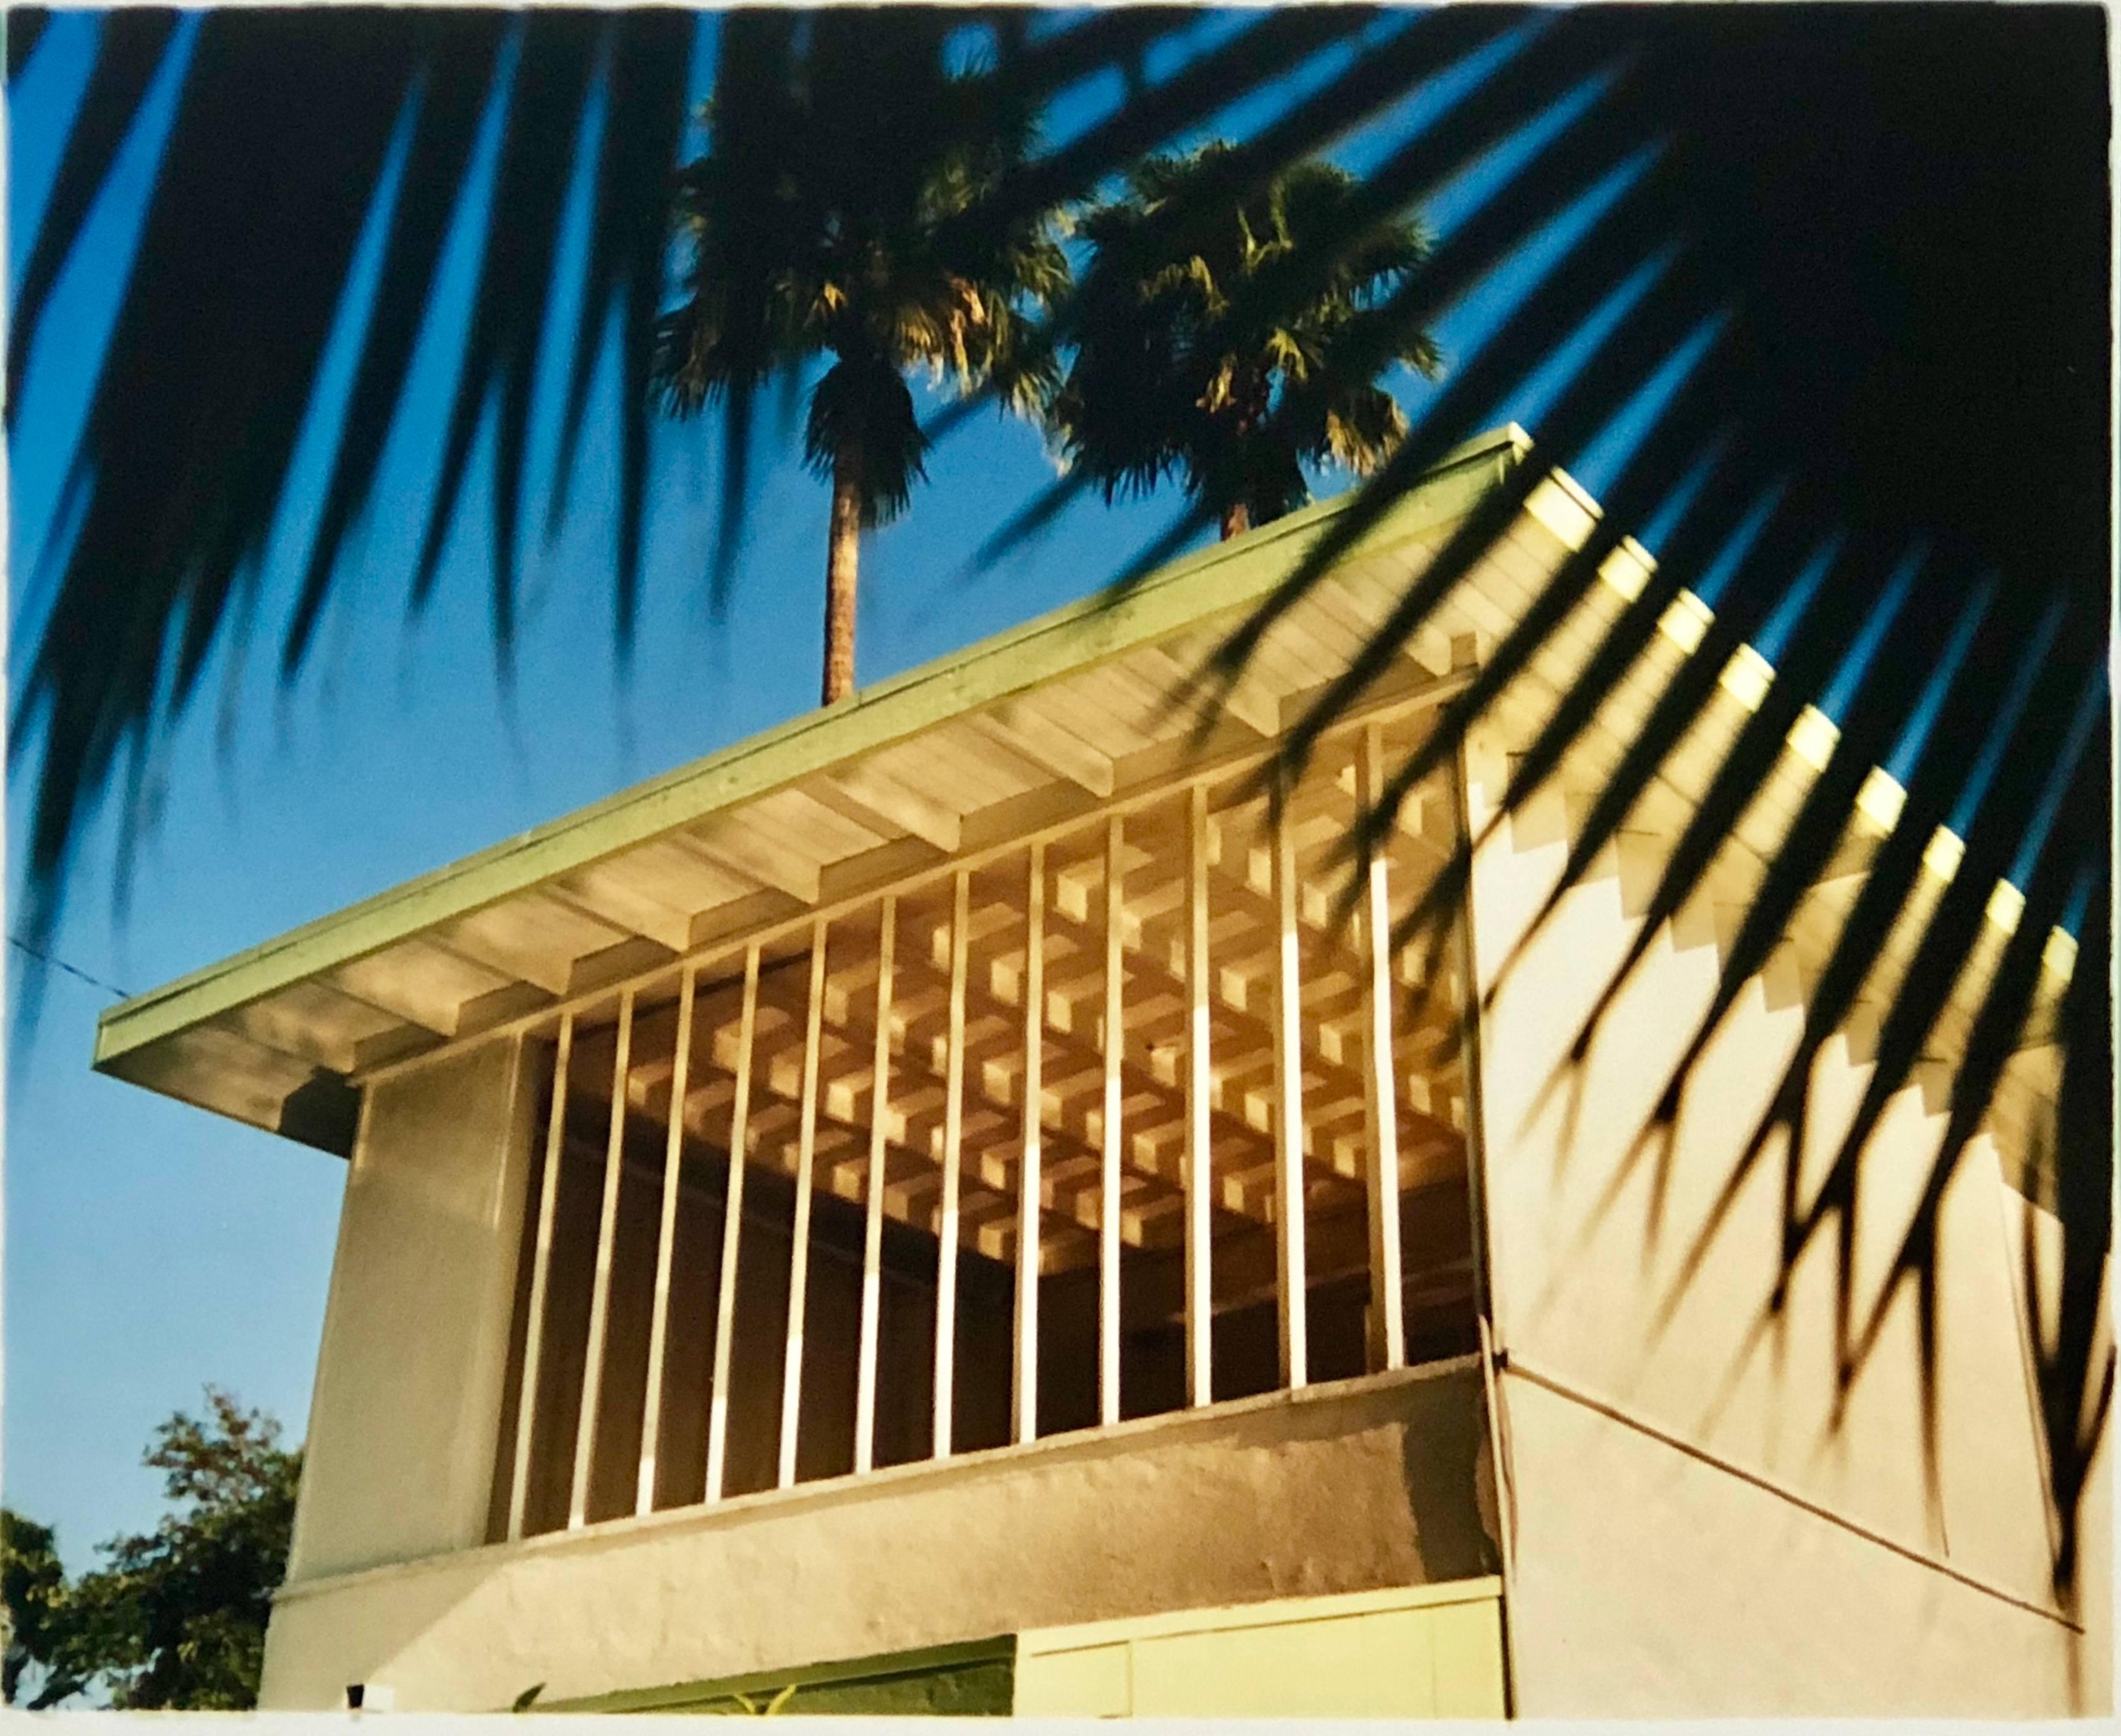 Richard Heeps Print - Ballantines Movie Colony II, Palm Springs, California - Mid-Century Architecture